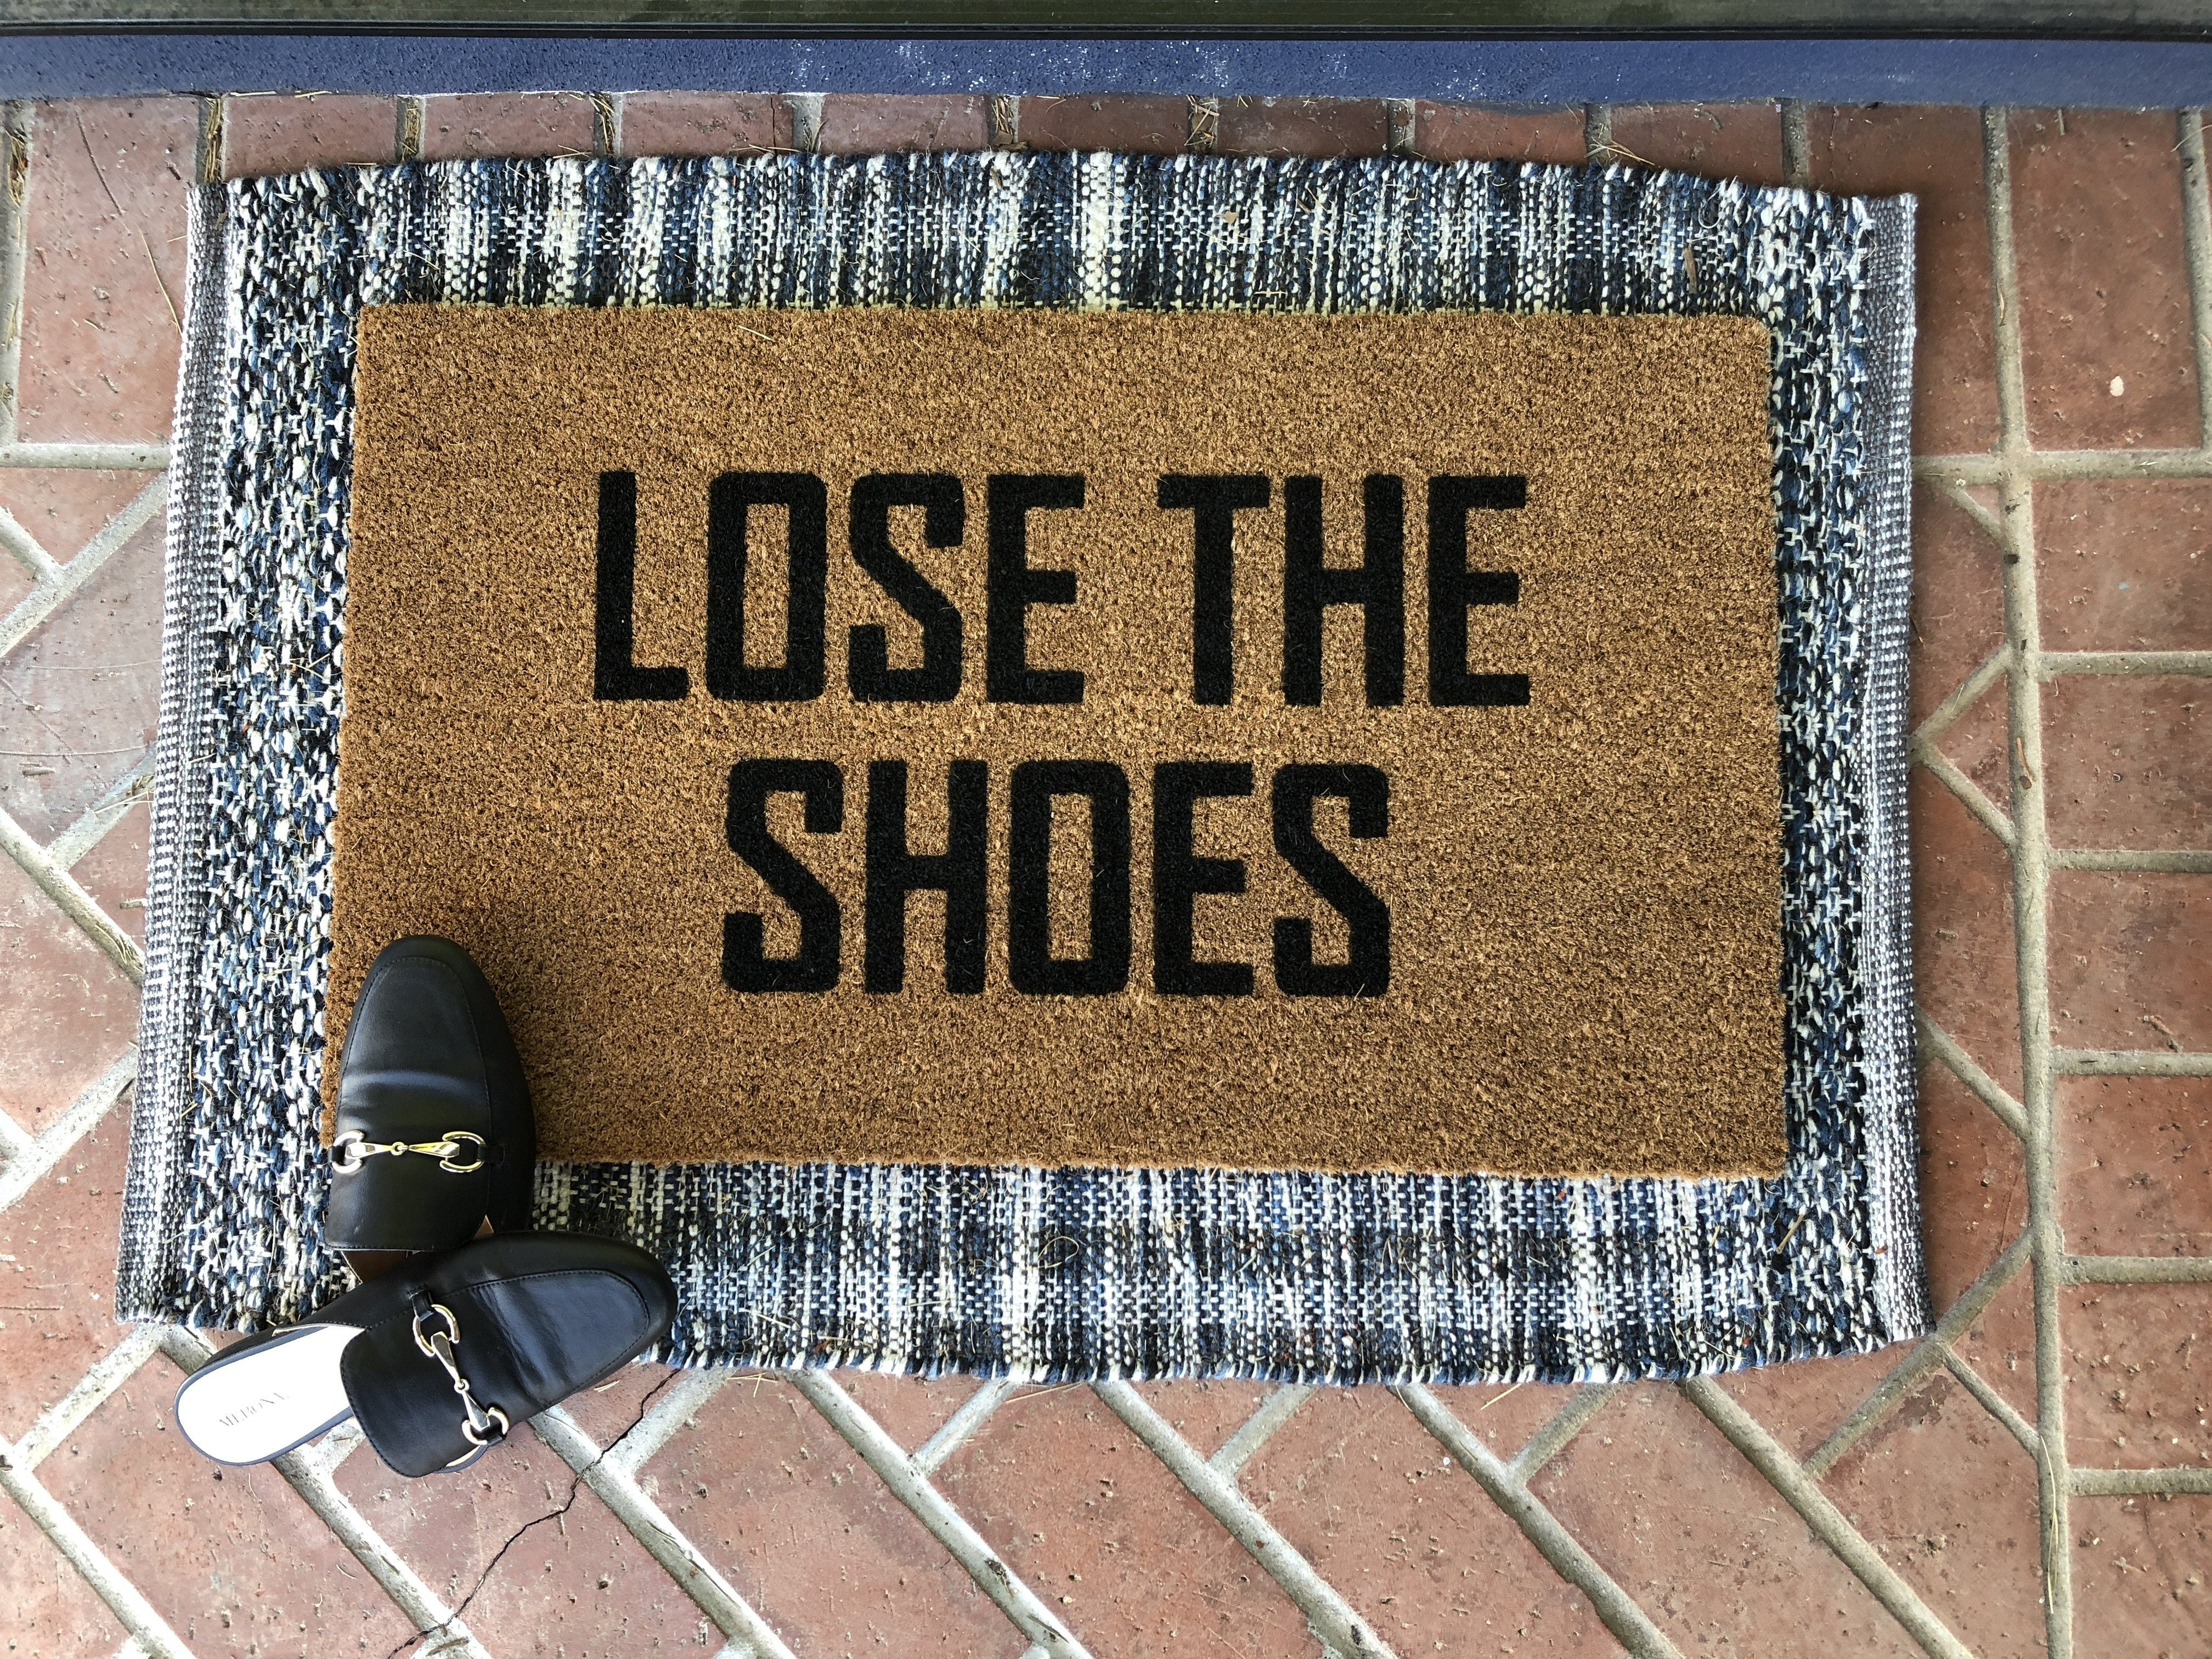 Lose the Shoes Doormat, Funny Doormats